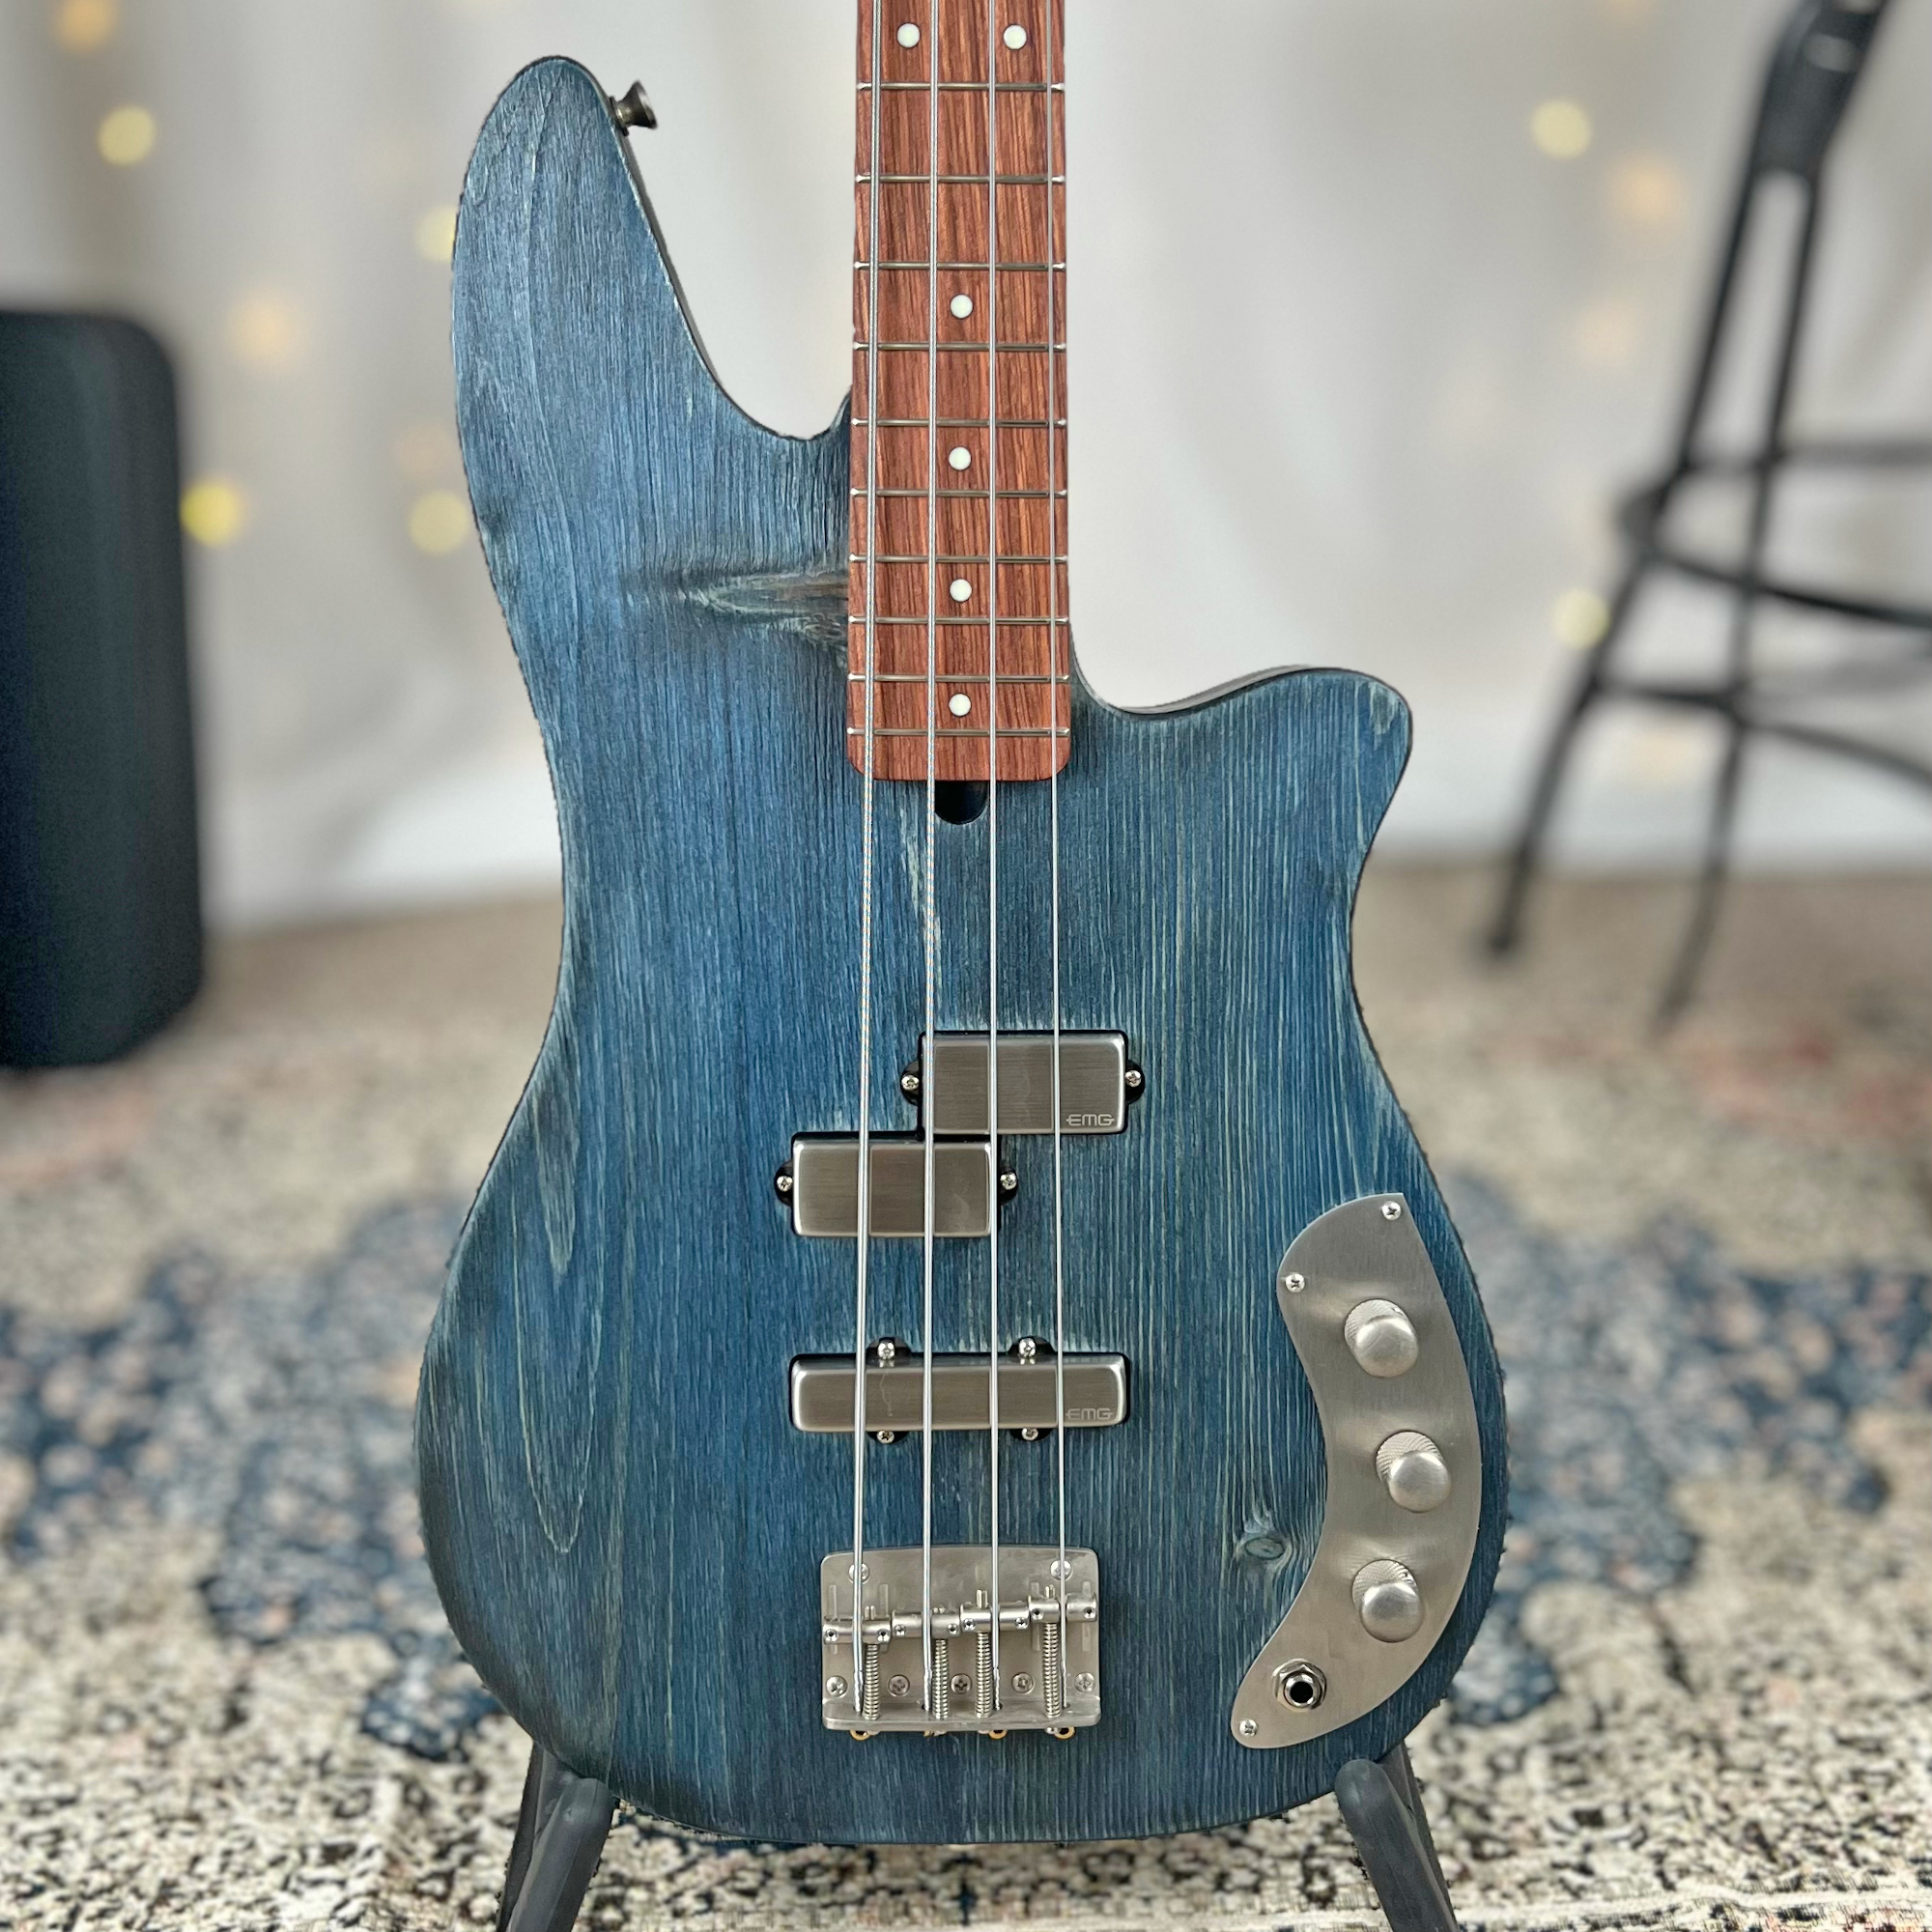 Roxanne PJ 32" Medium-Scale Bass in Blue Steel Pulse on Textured Pine with EMG PJ Pickup Set